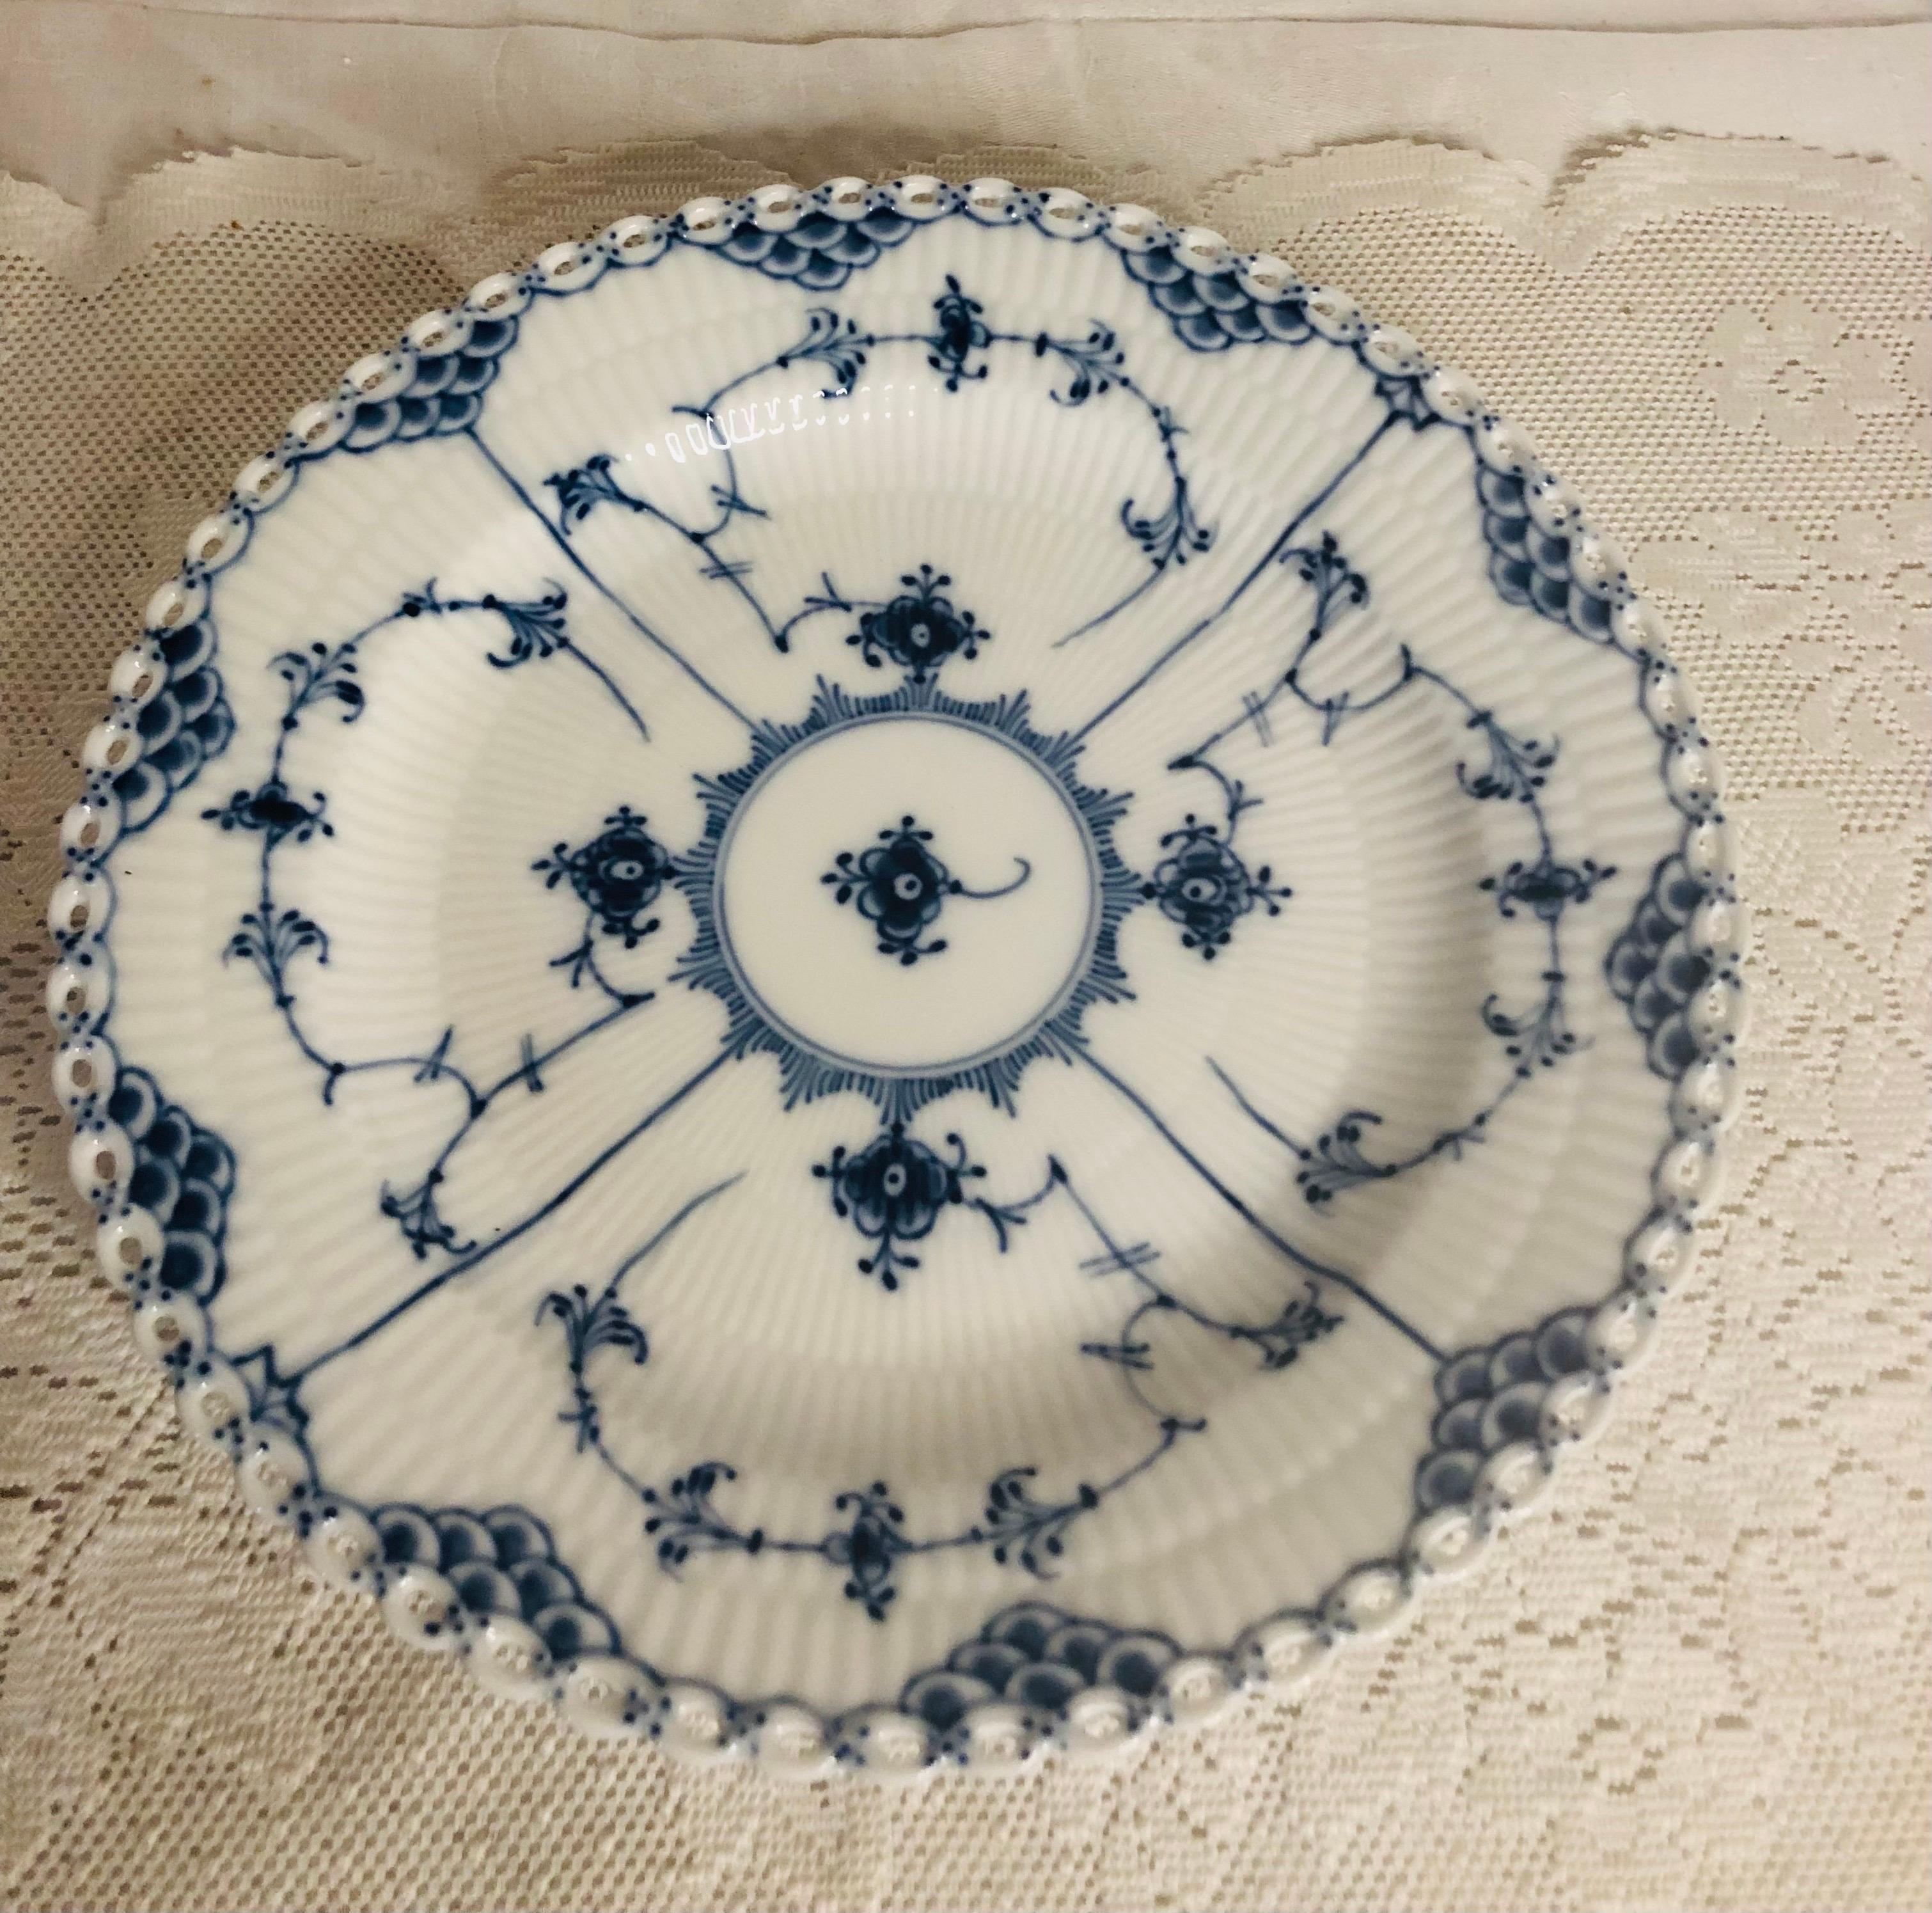 Porcelain Set of 11 Royal Copenhagen Fluted Dinner Plates with Full Lace Openwork Design